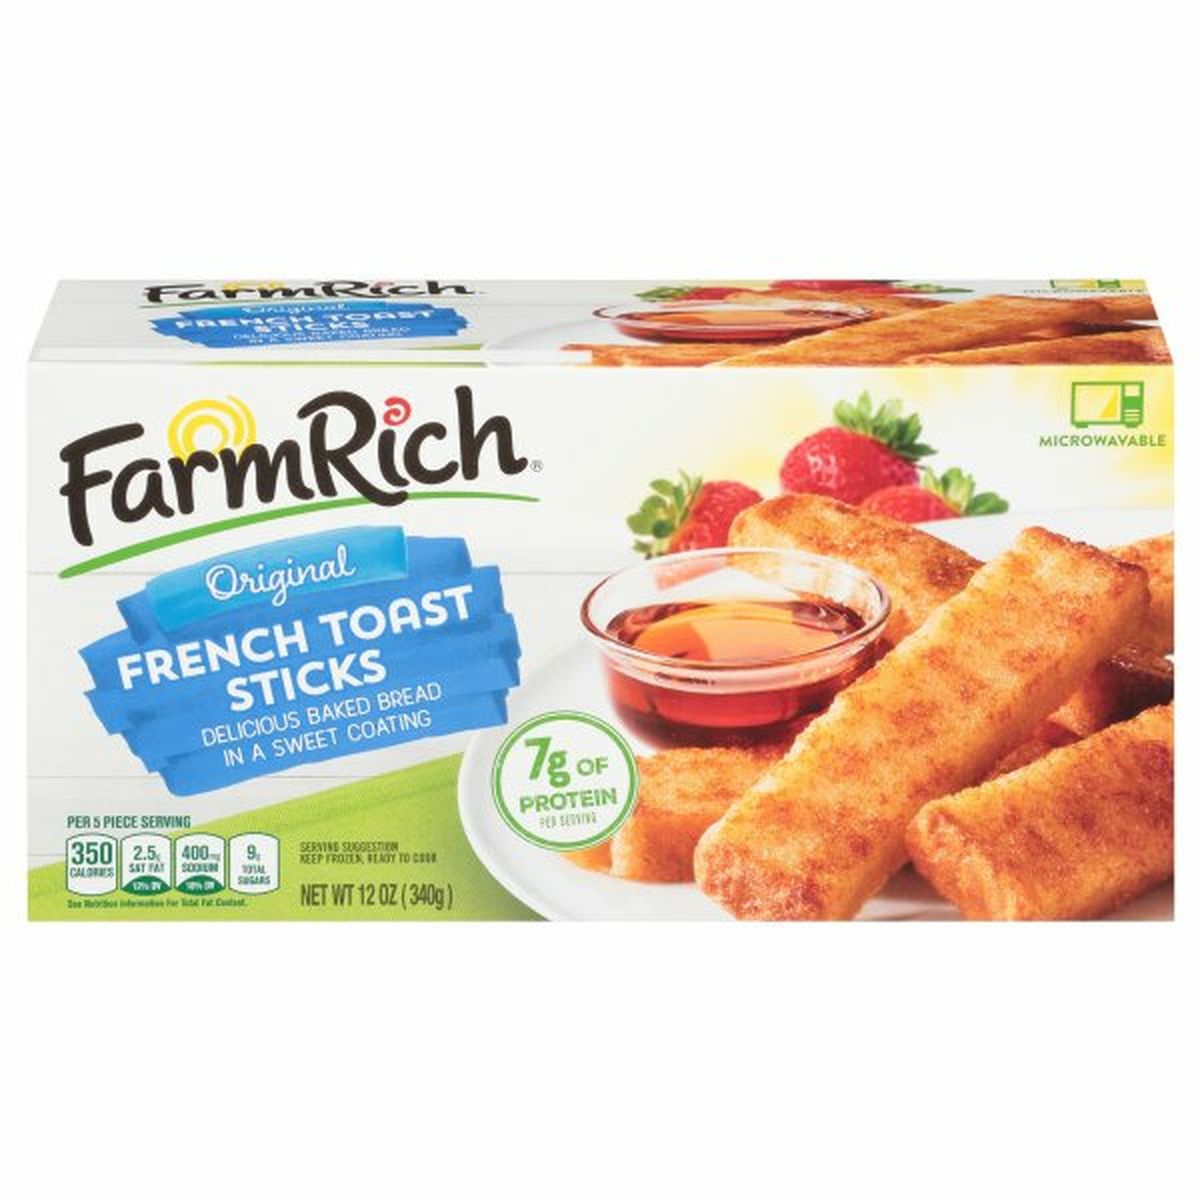 Calories in Farm Rich French Toast Sticks, Original